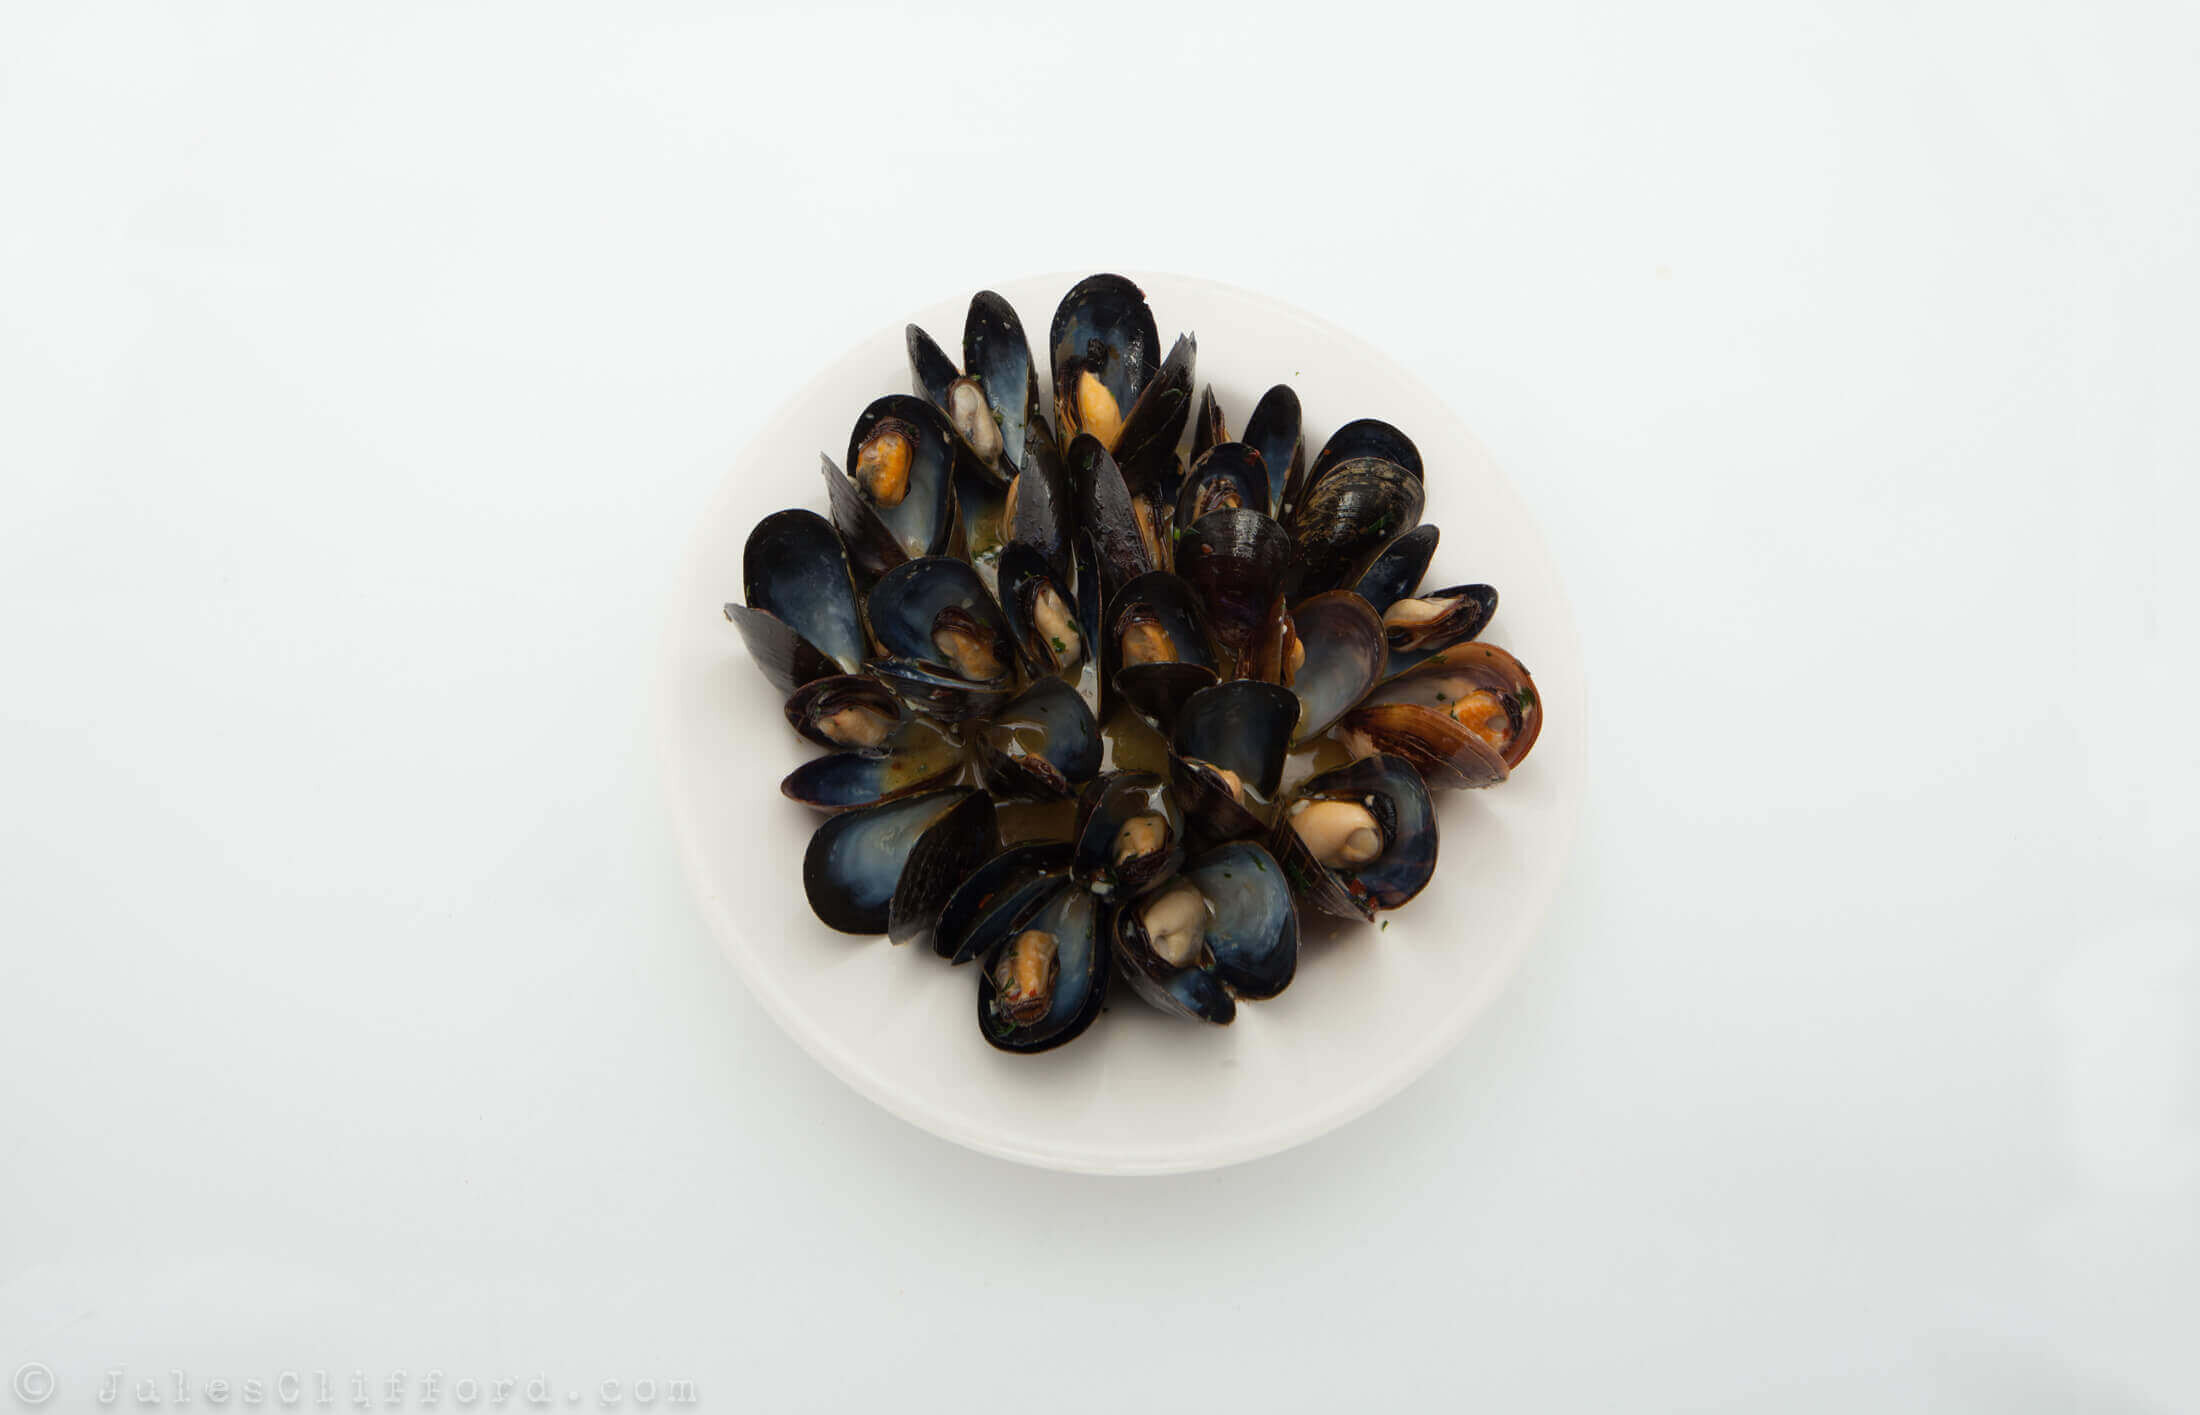 mussels-carousel.jpg